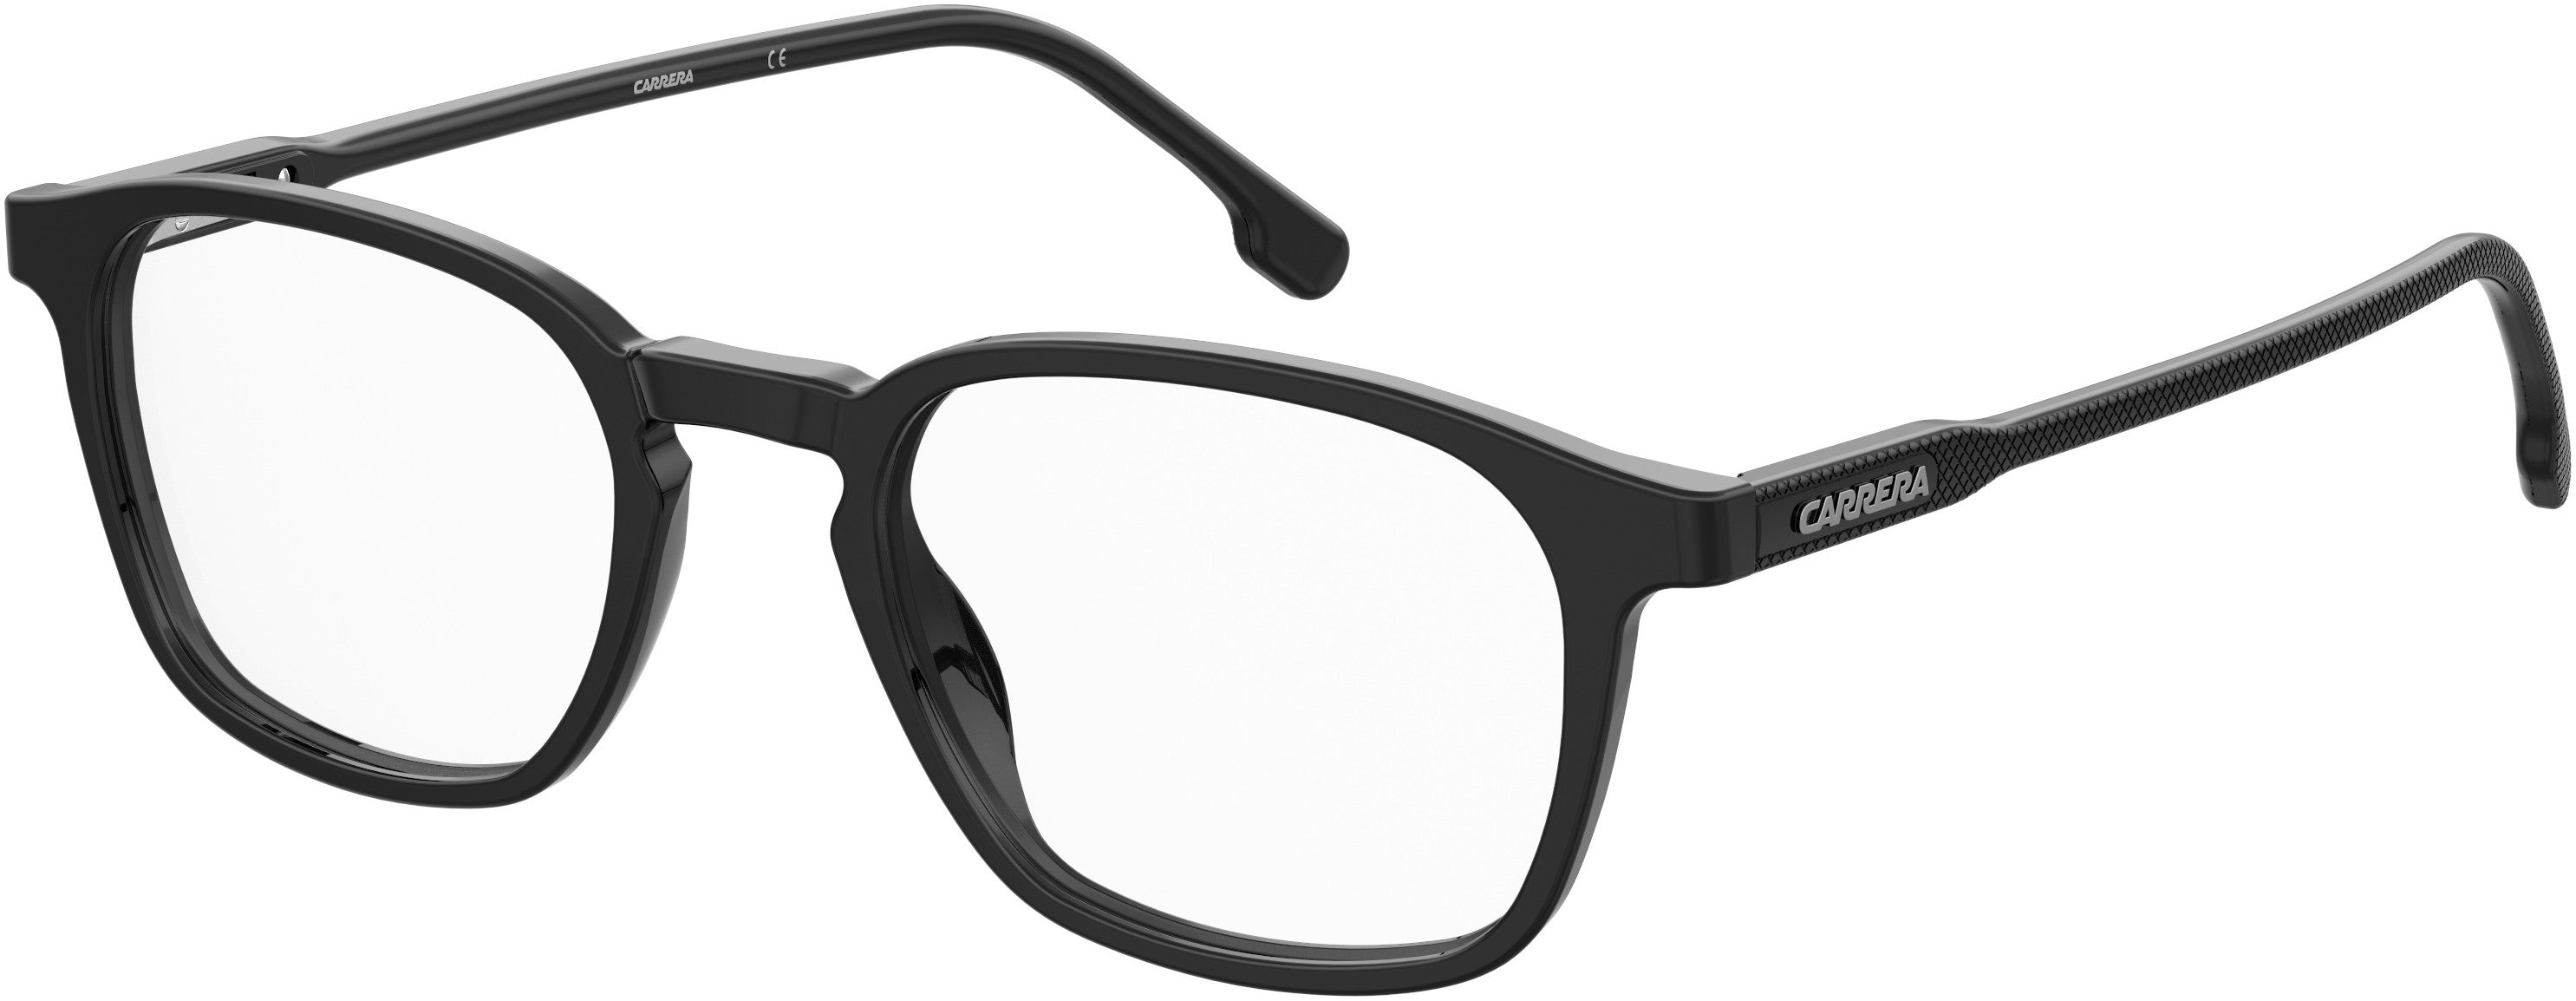  Carrera 244 Rectangular Eyeglasses 0807-0807  Black (00 Demo Lens)